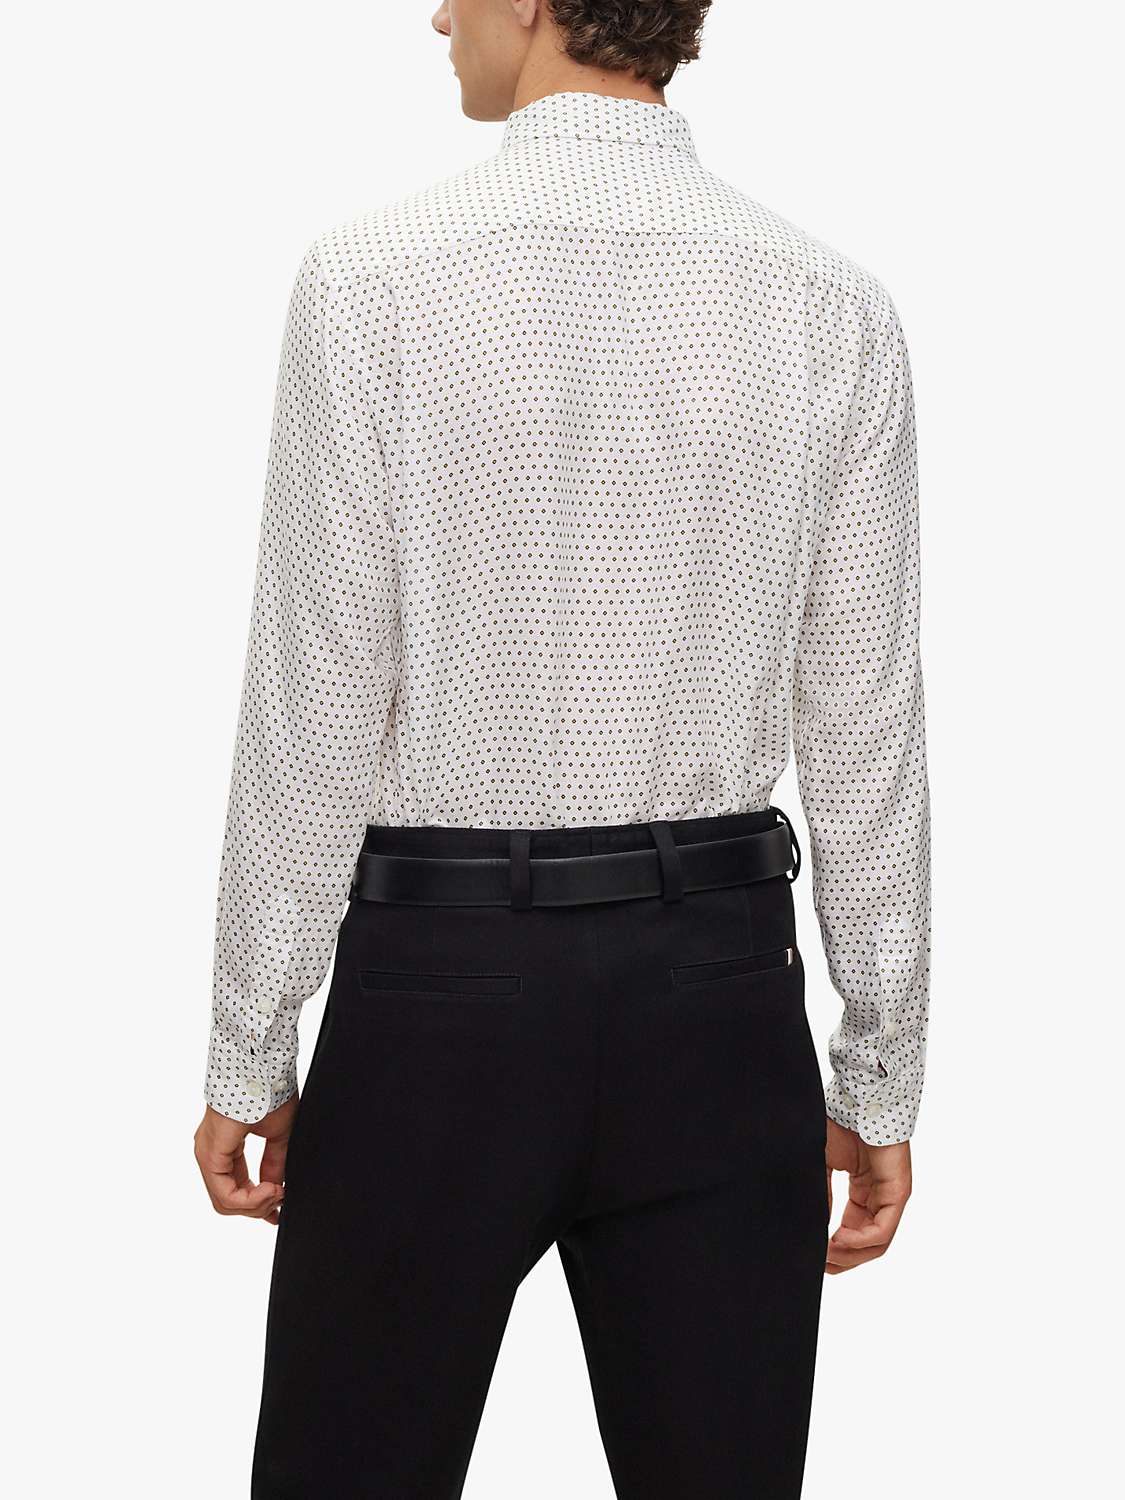 Buy HUGO BOSS BOSS Roan Geometric Print Slim Fit Shirt, White/Green Online at johnlewis.com